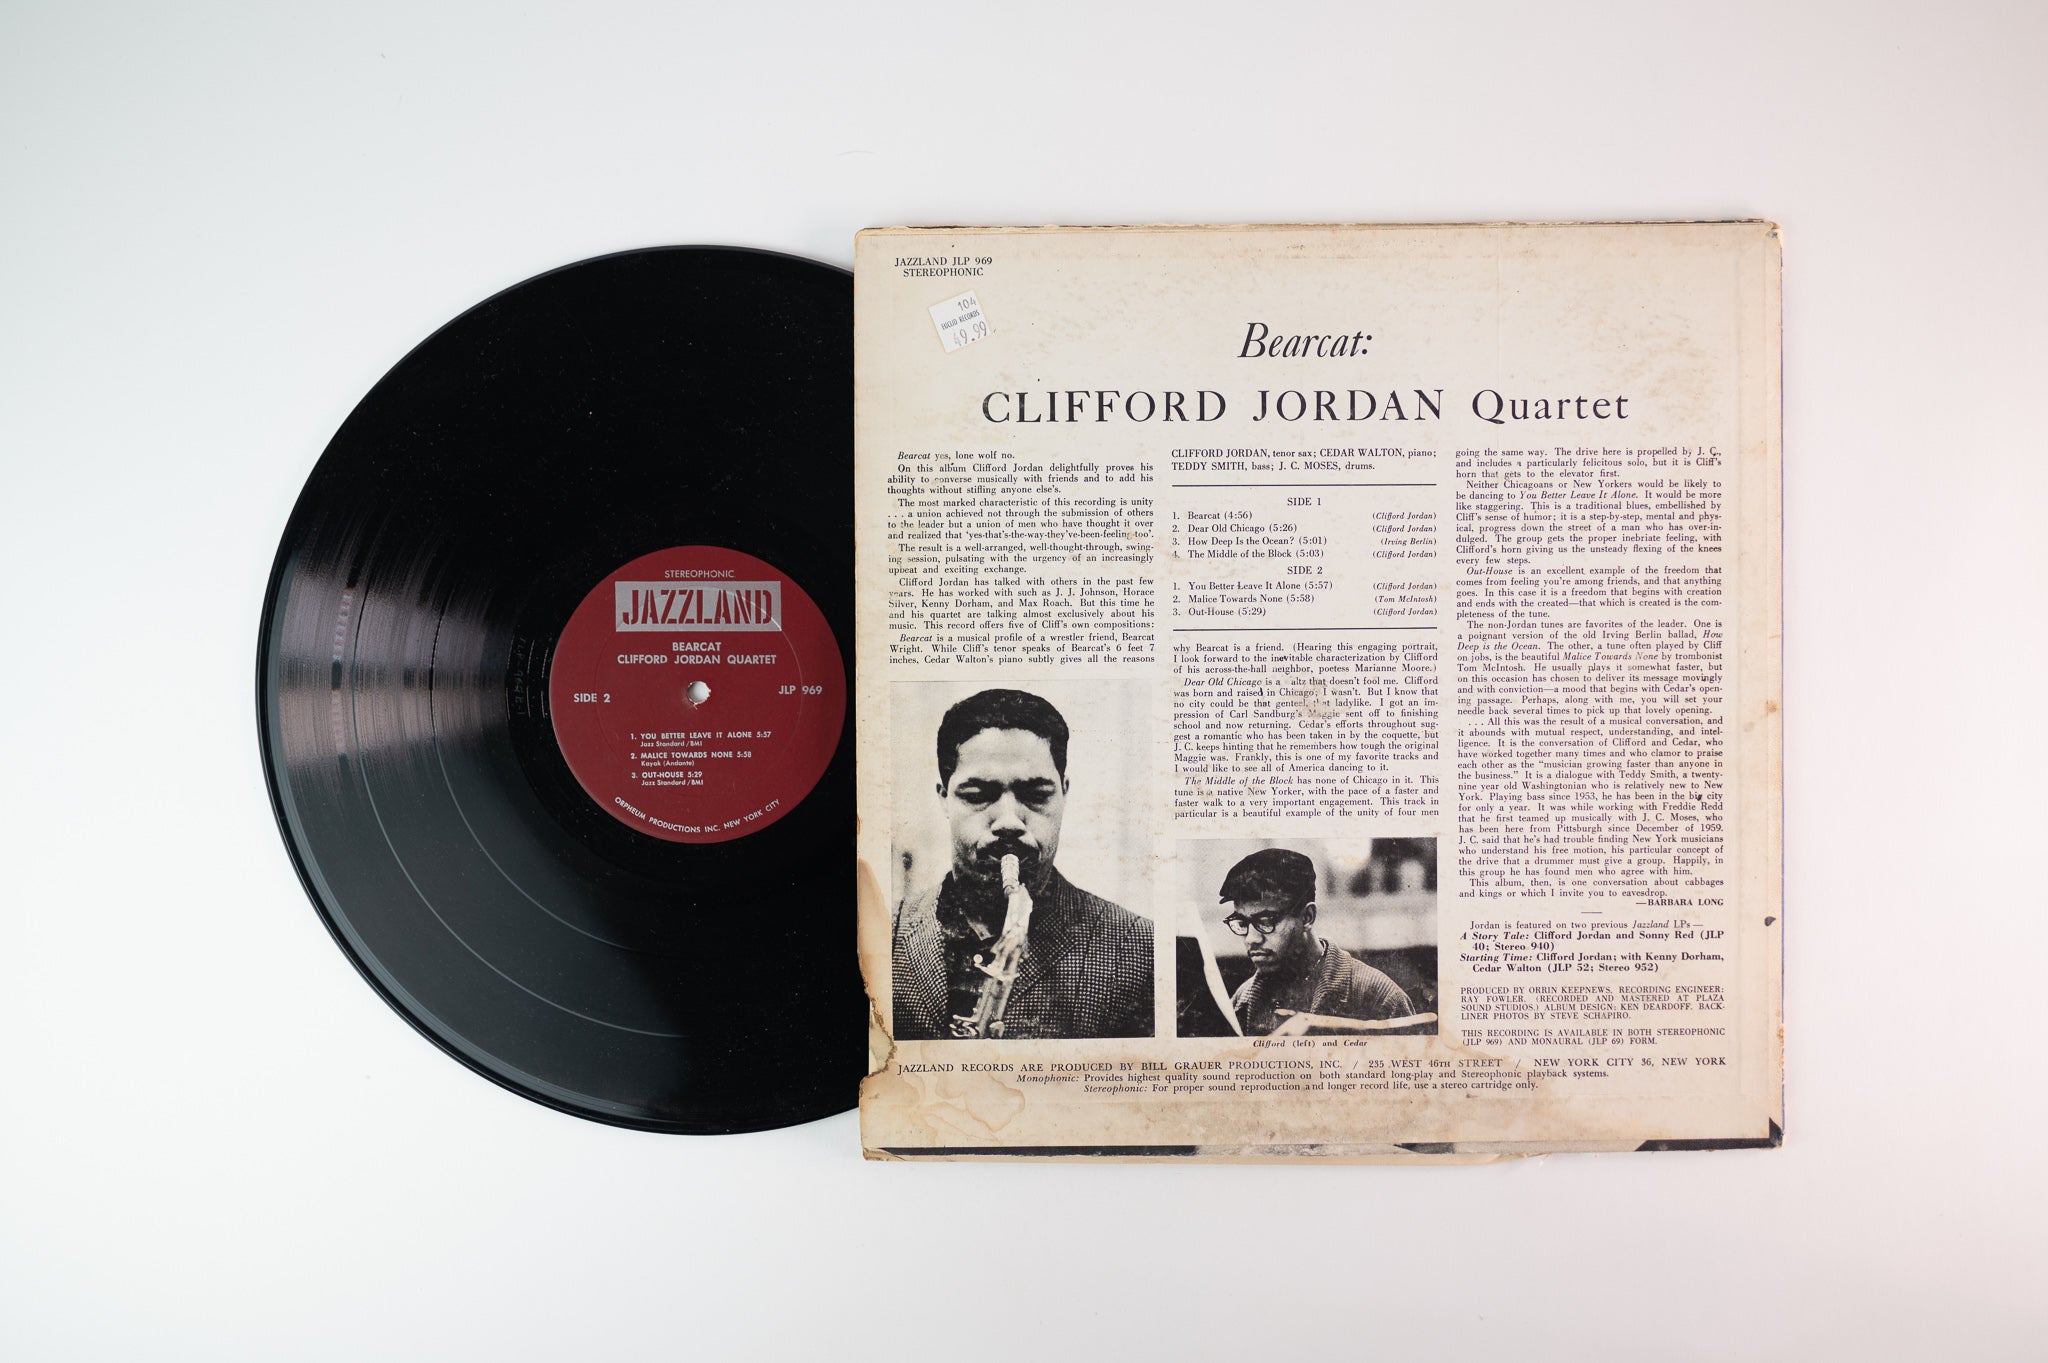 Clifford Jordan Quartet - Bearcat on Jazzland Stereo Orpheum Productions